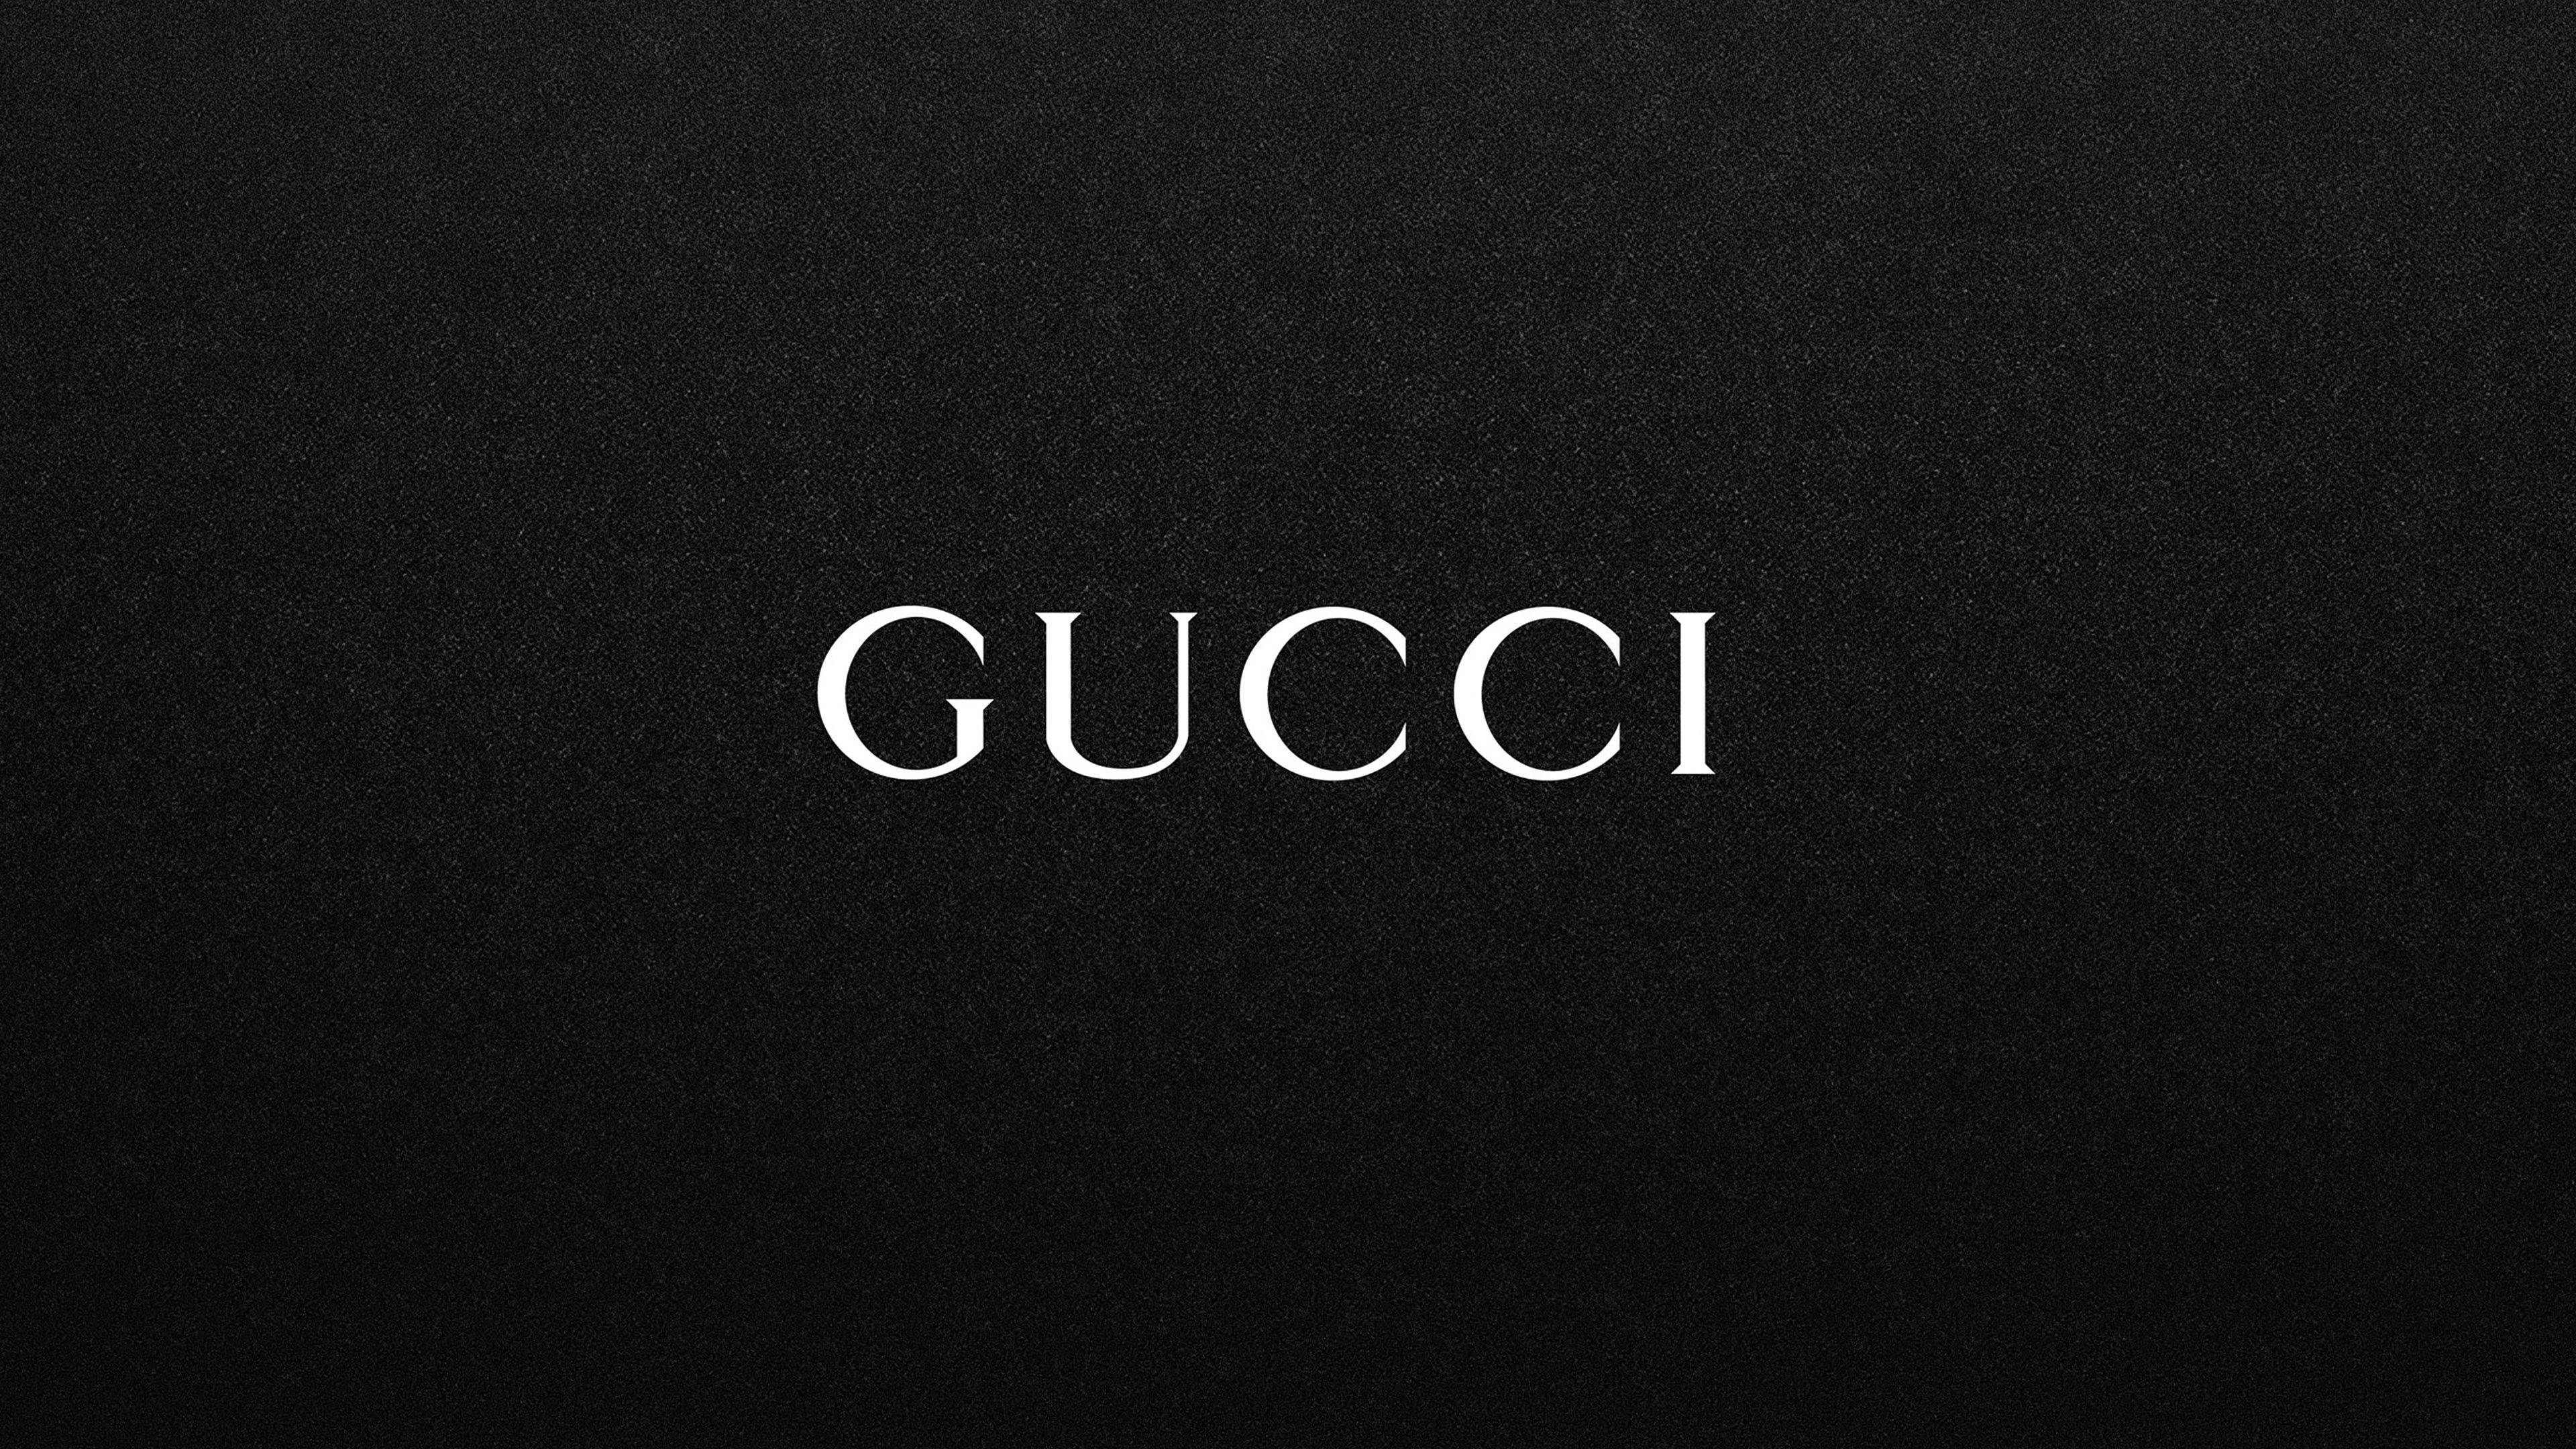 Gucci 4K wallpaper